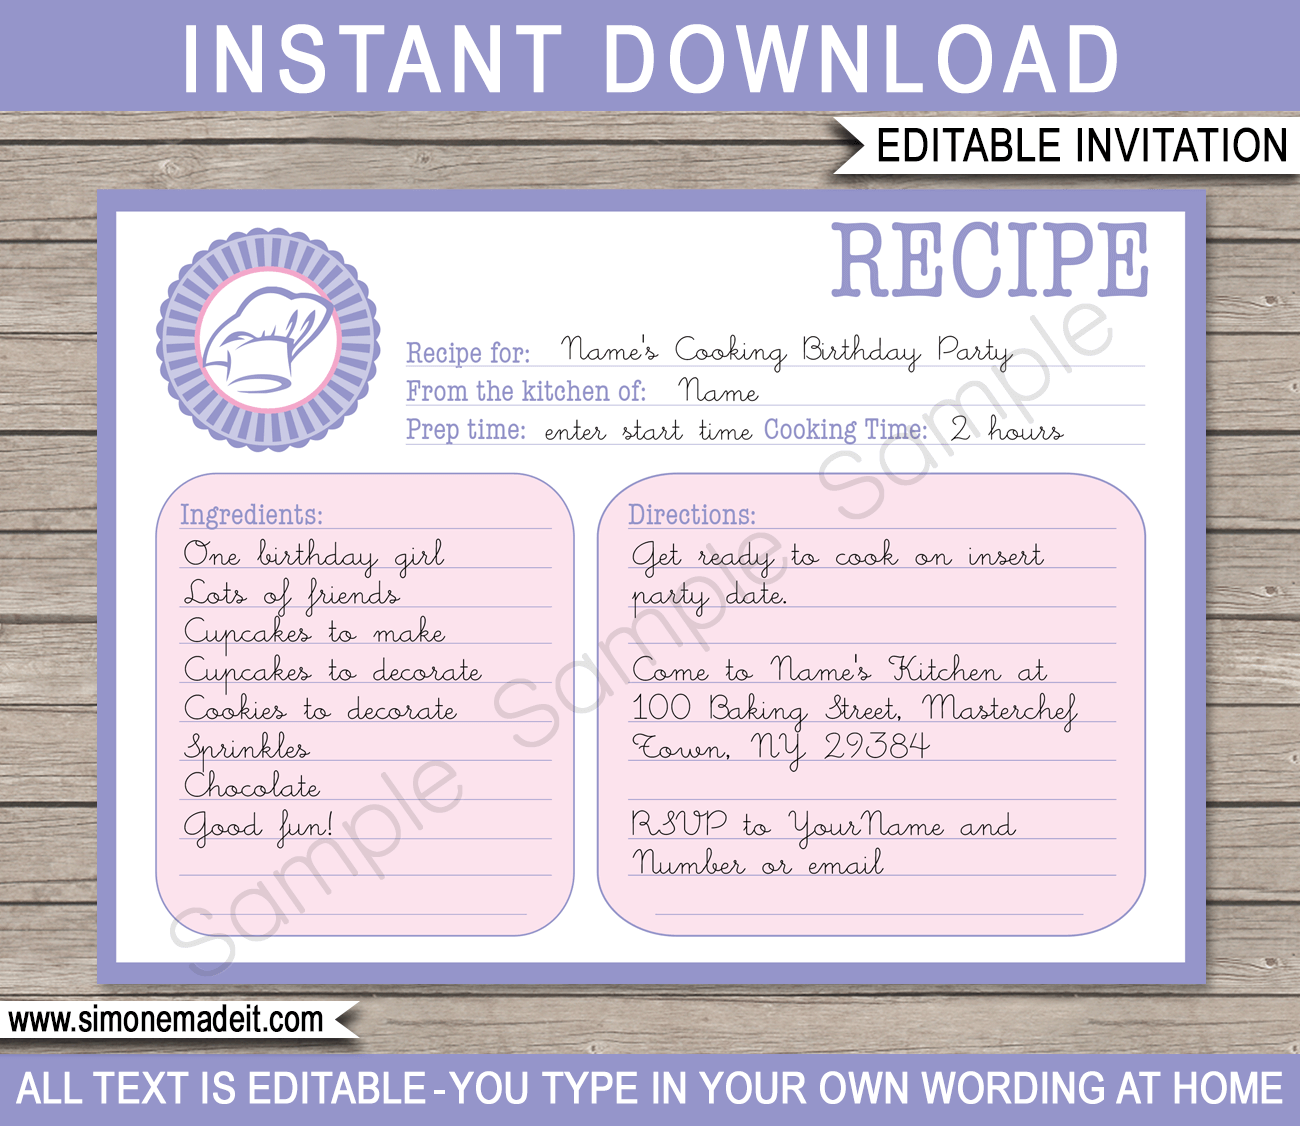 Cooking Recipe Card Invitations | Birthday Party | Editable DIY Theme Template | INSTANT DOWNLOAD $7.50 via SIMONEmadeit.com